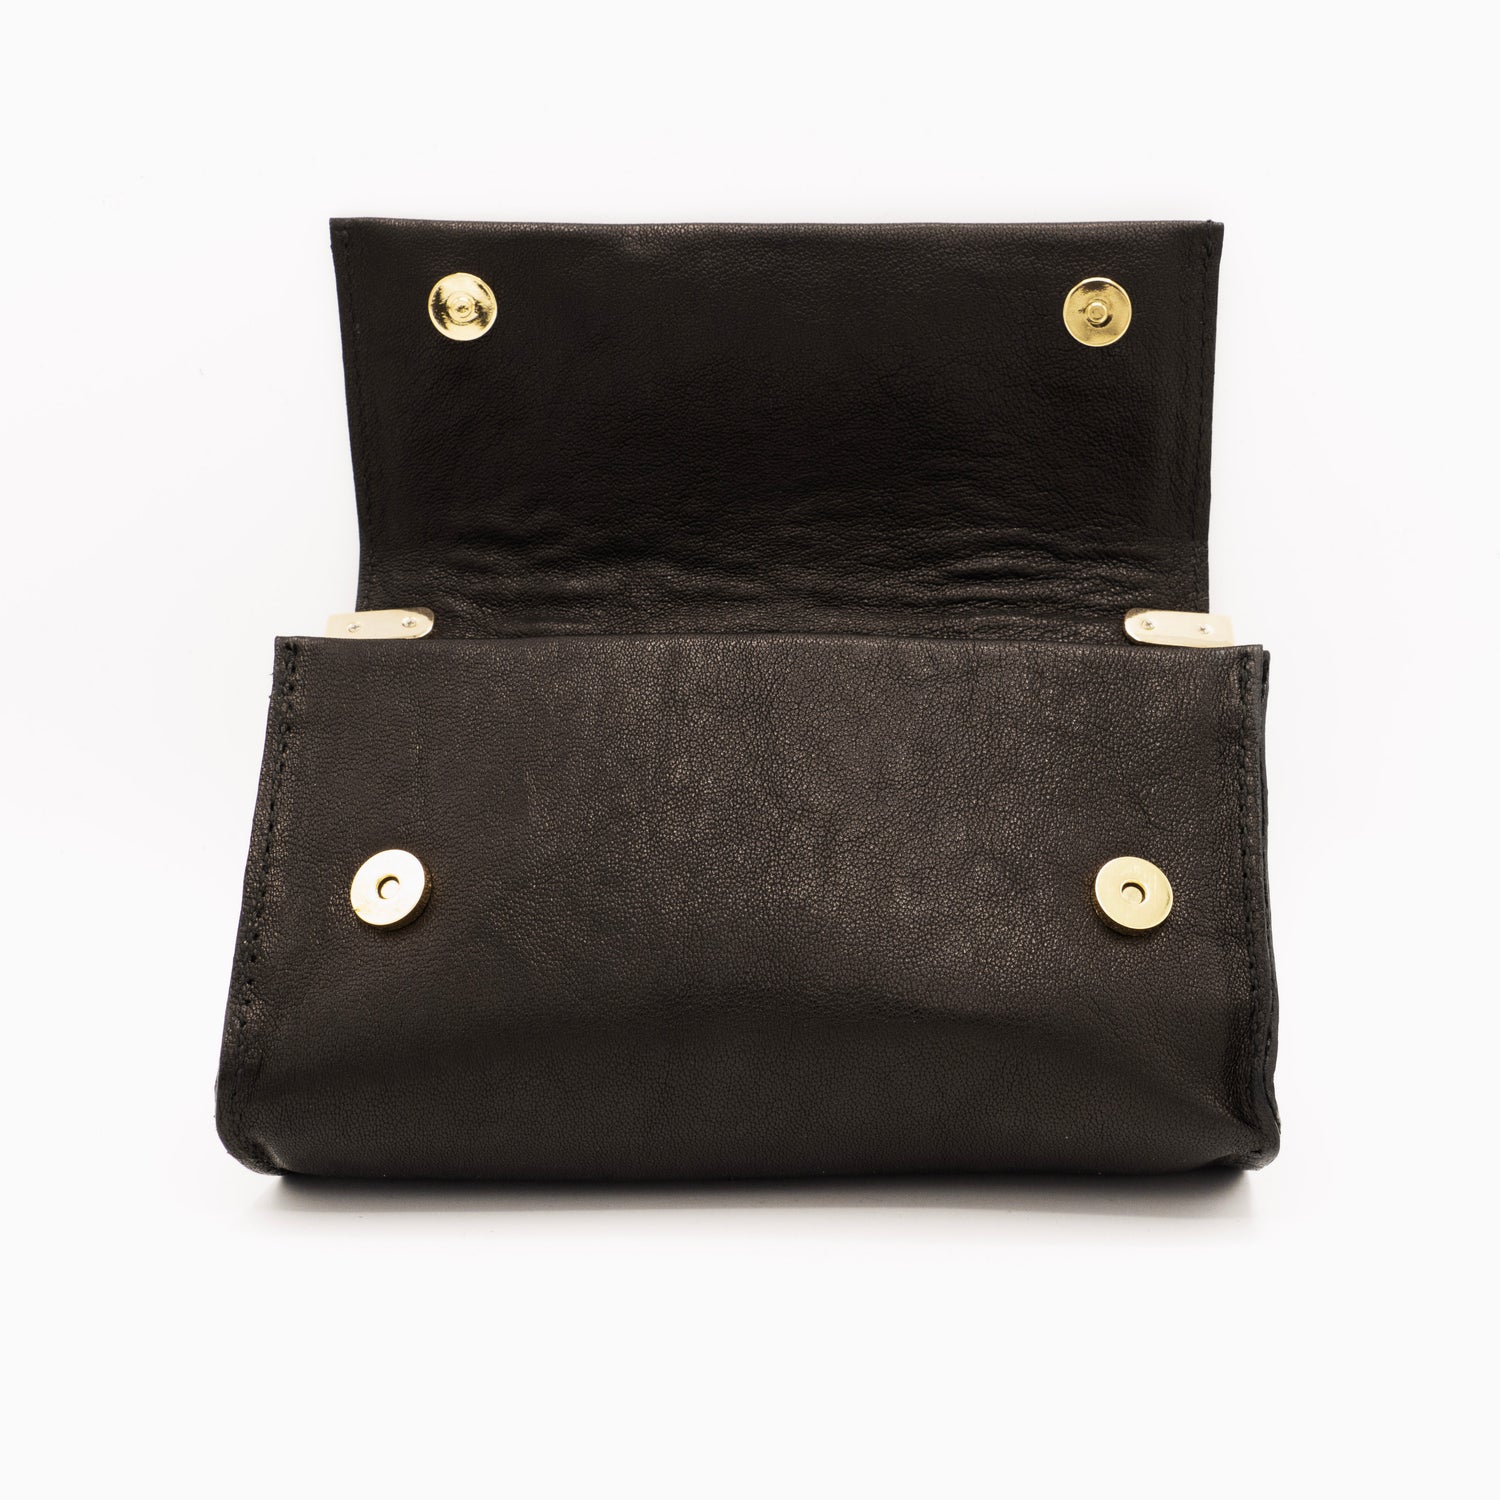 Laura B Paris Leather Handbag